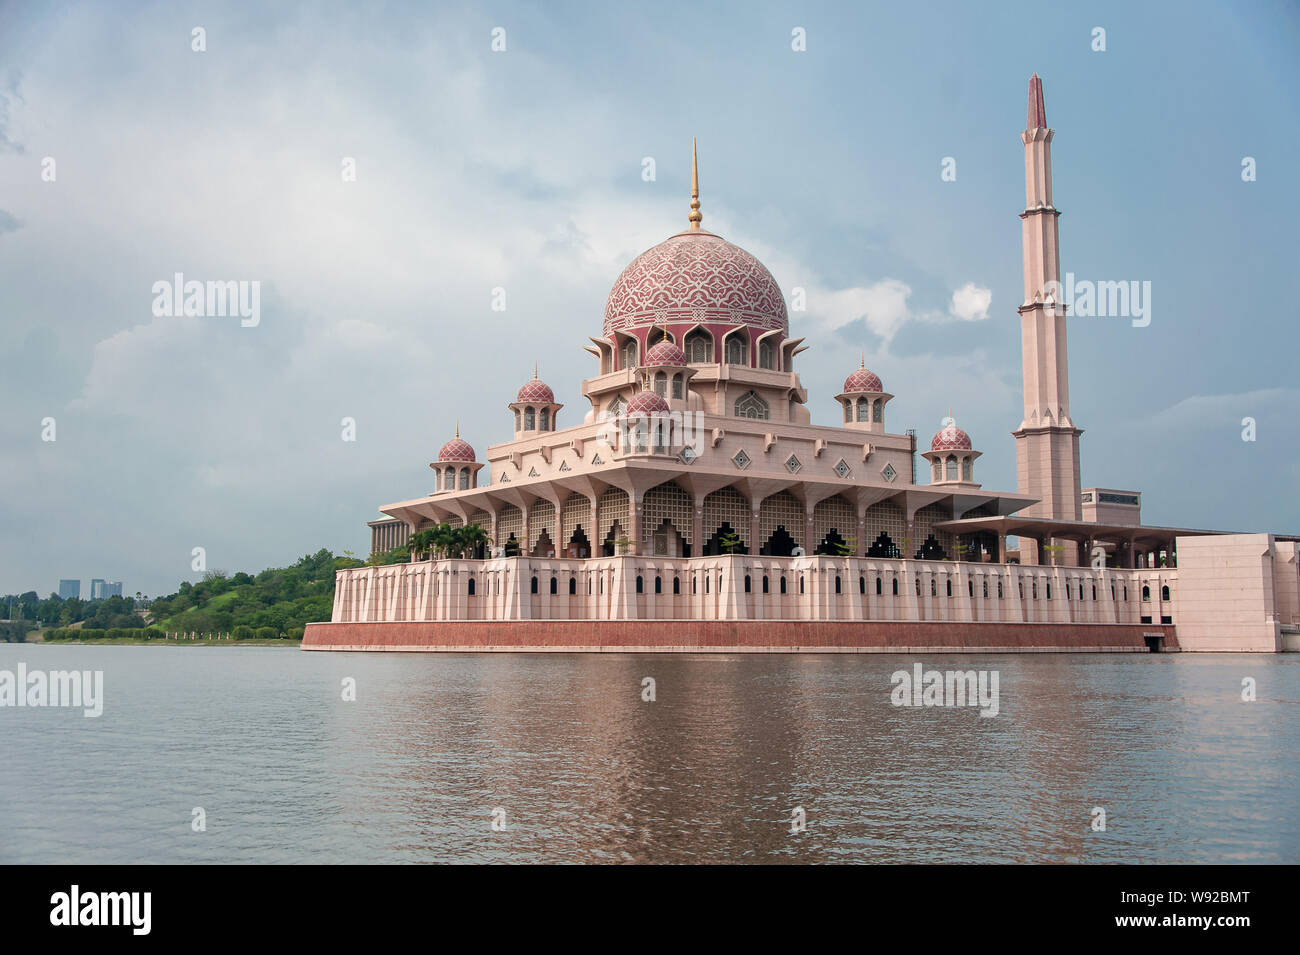 Mosquée Putra (Masjid Putra), Putrajaya, Malaisie. Banque D'Images